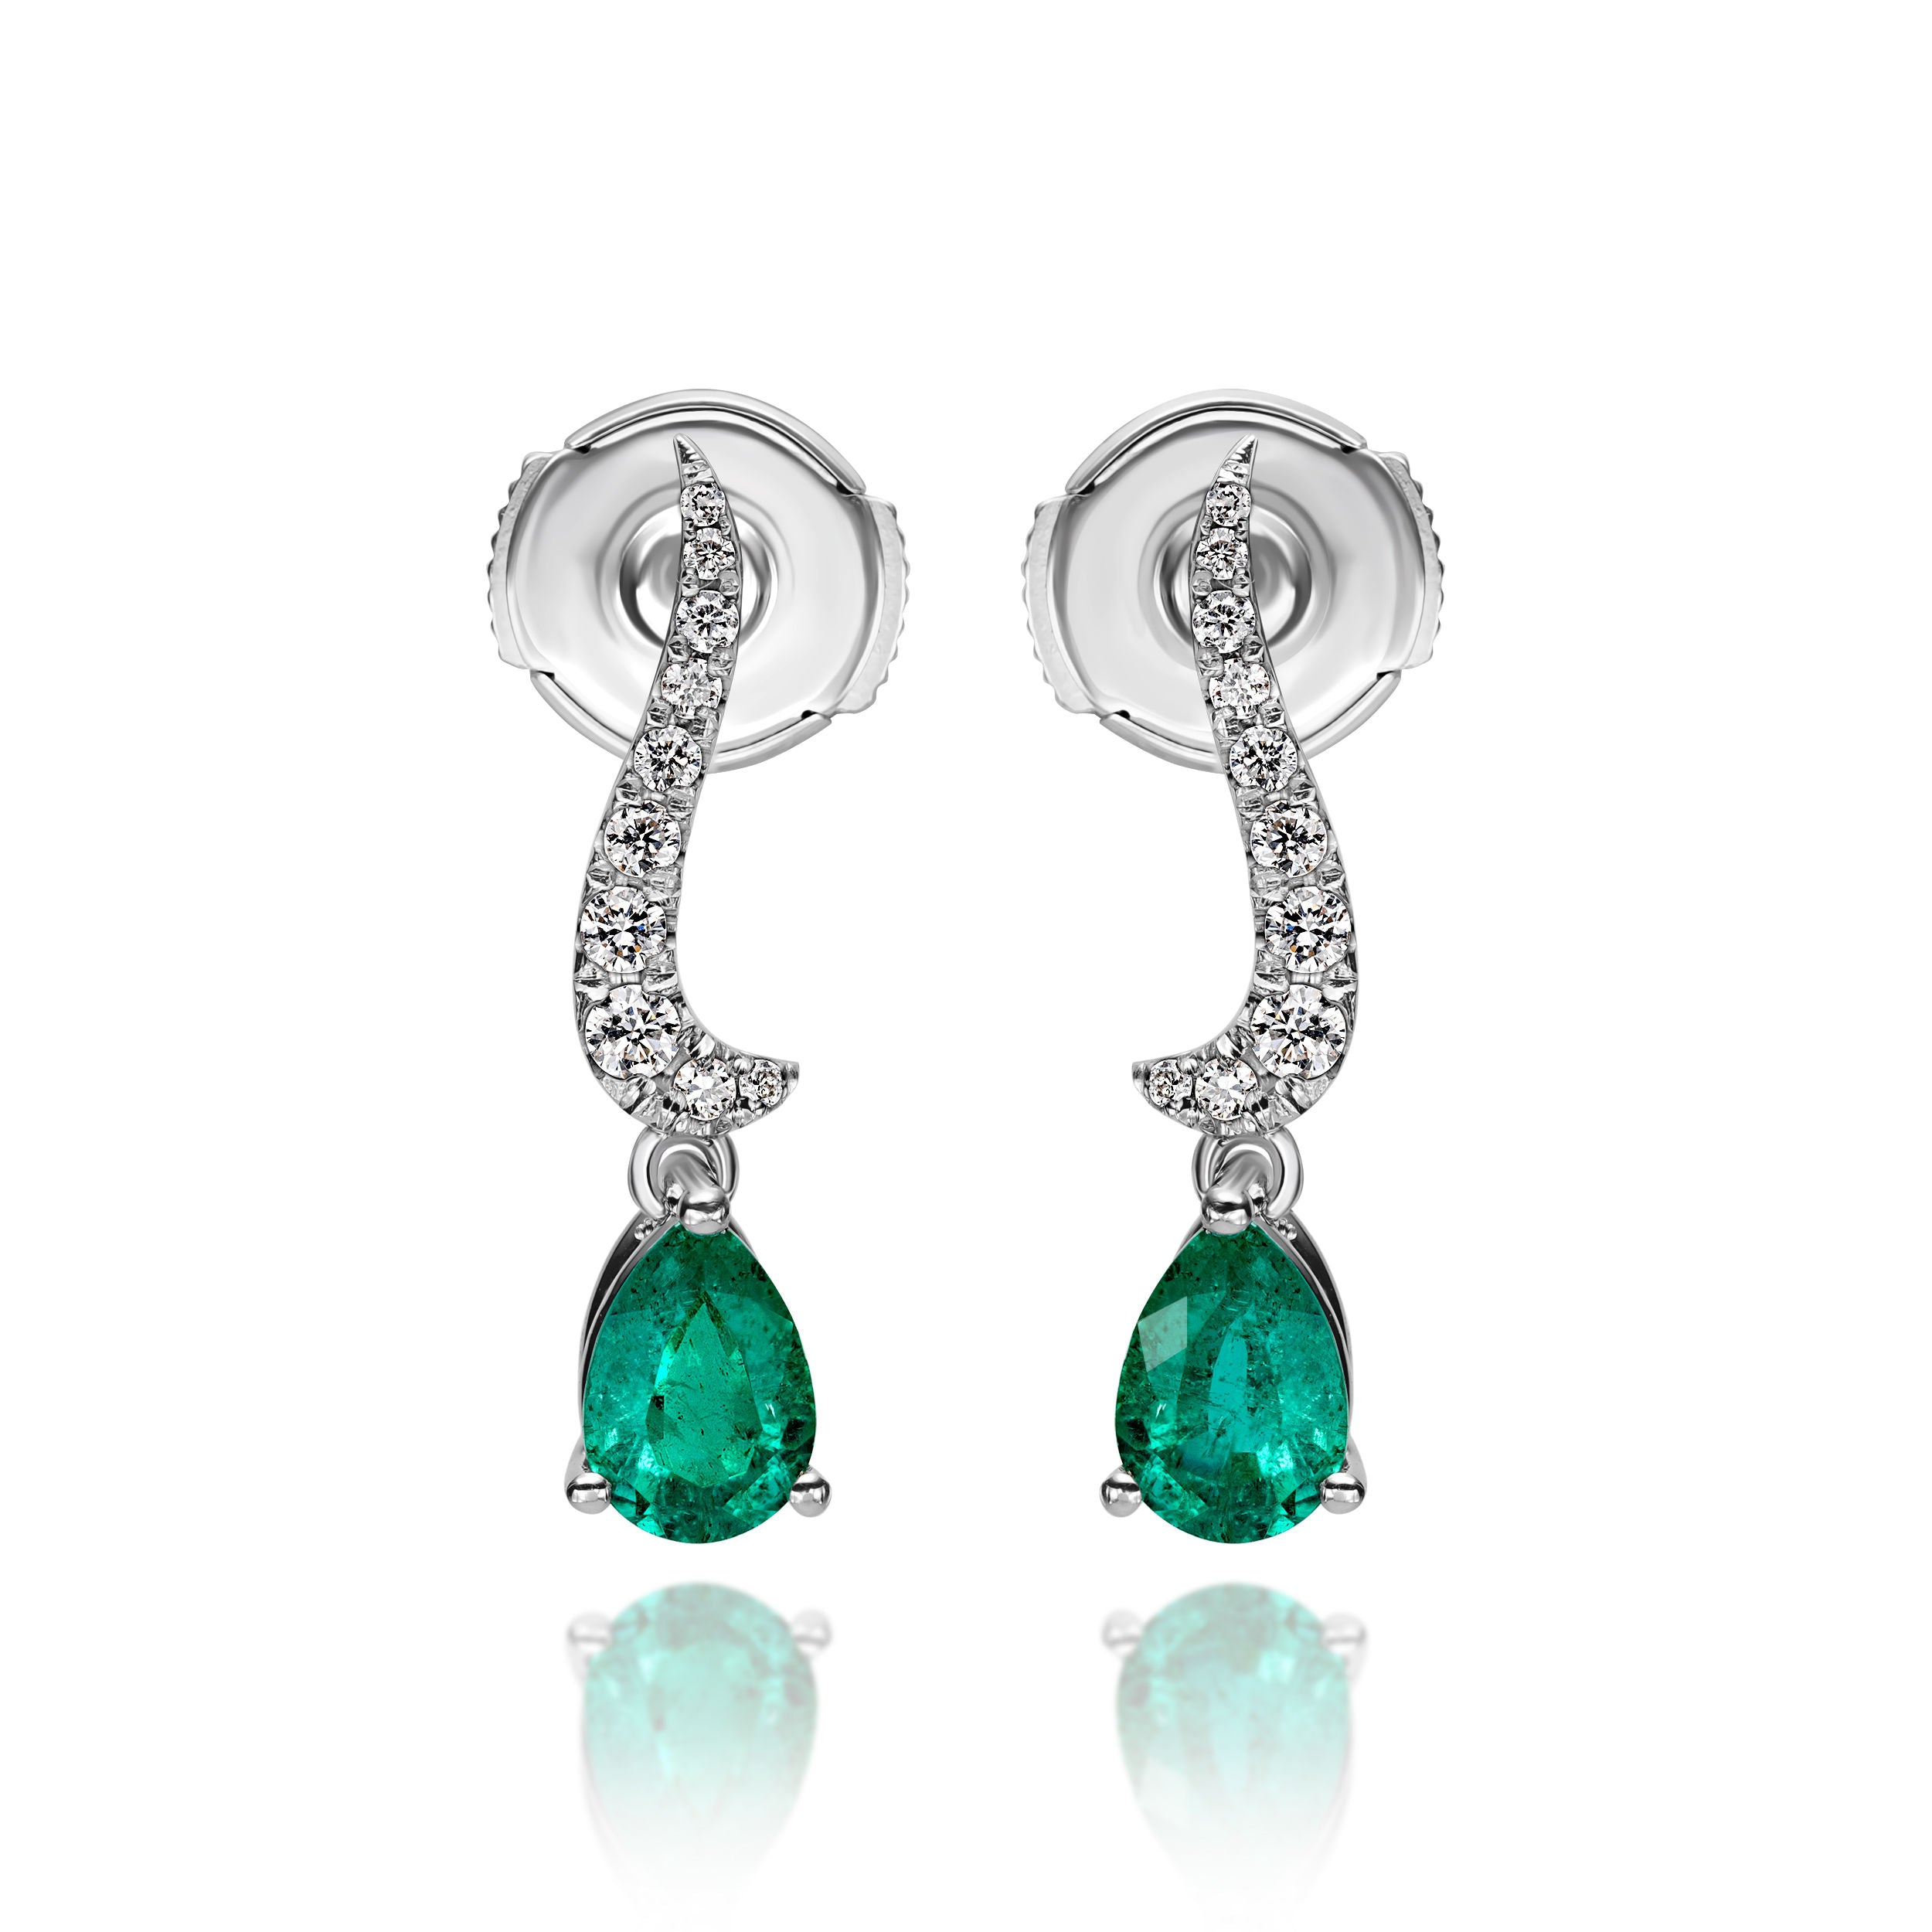 PS Emerald Earrings With Diamonds - 0.93ct TW